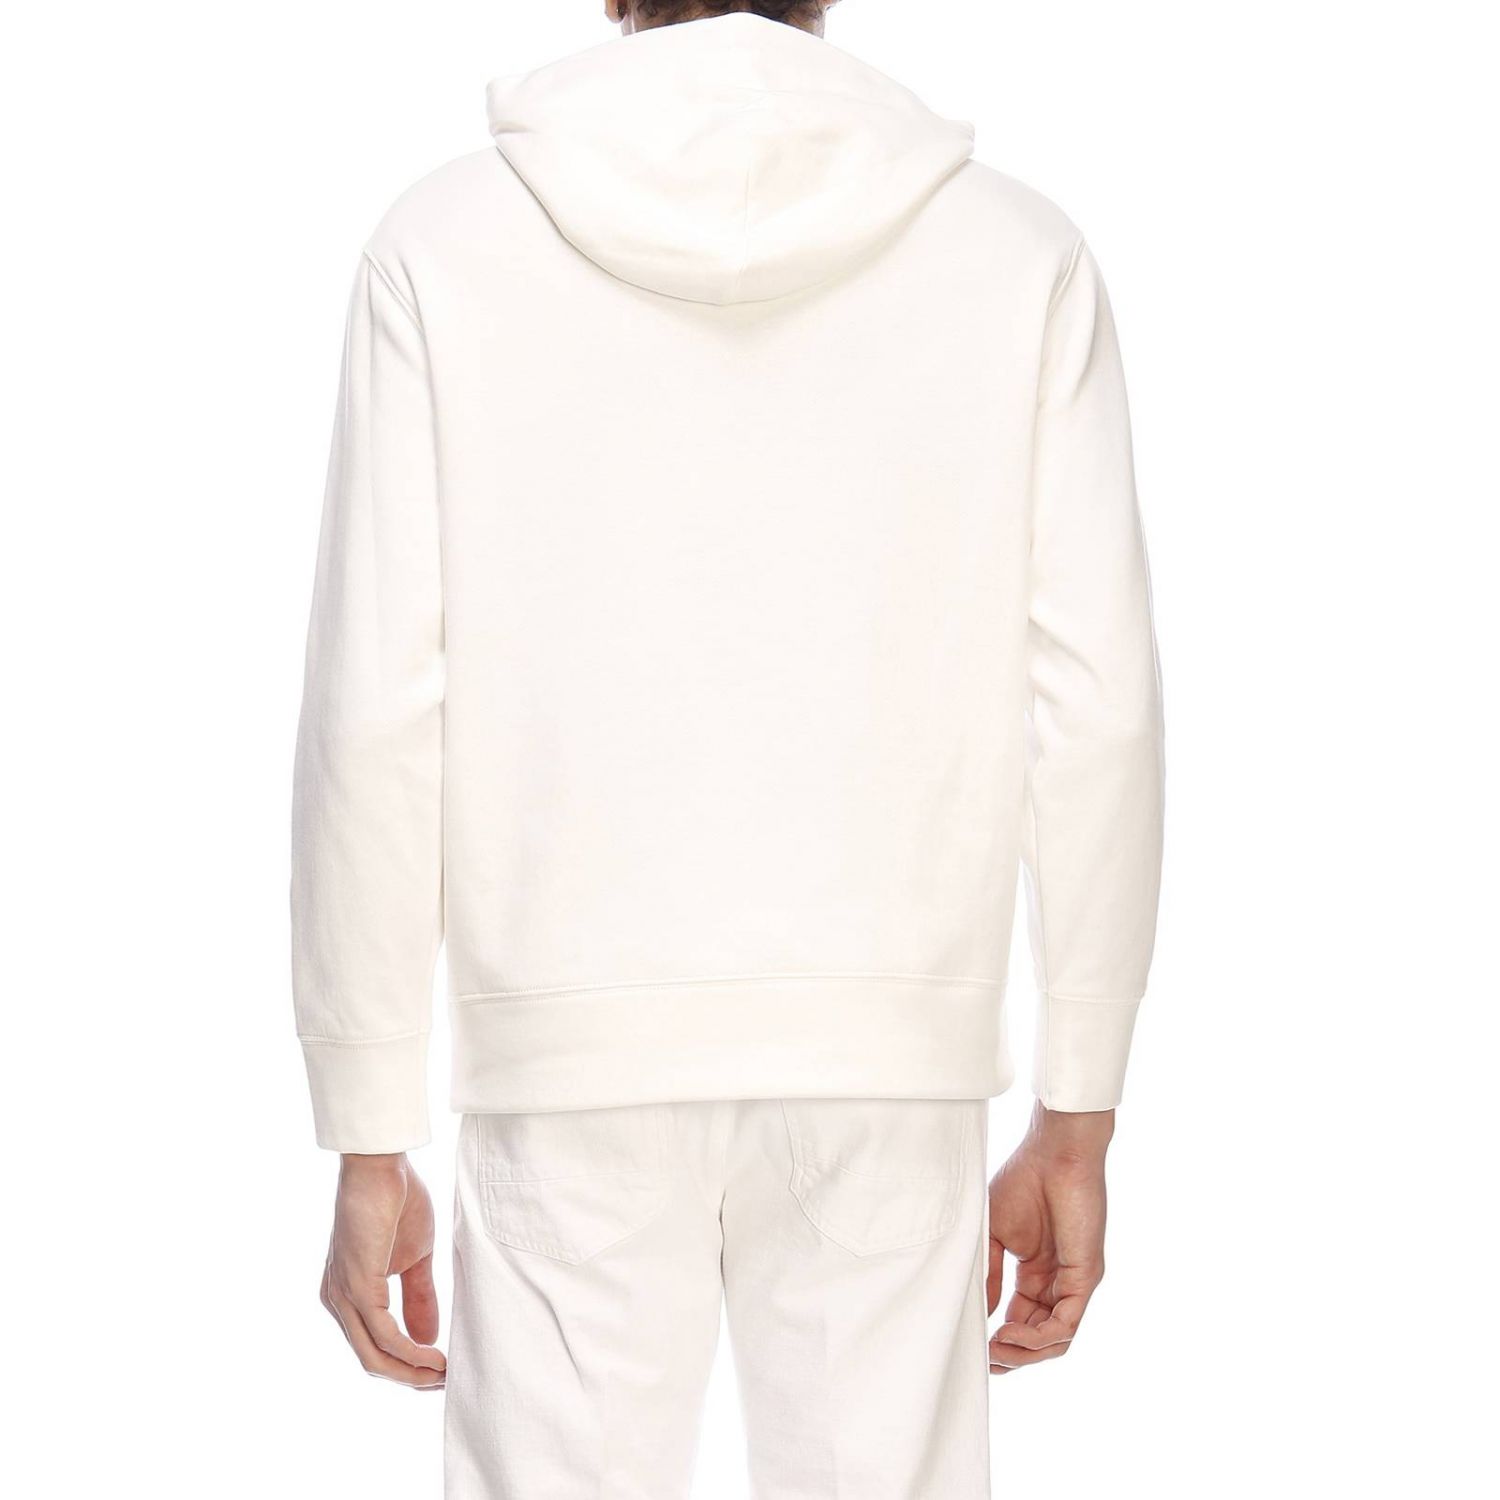 Roberto Cavalli Outlet: Sweater men | Sweater Roberto Cavalli Men White ...